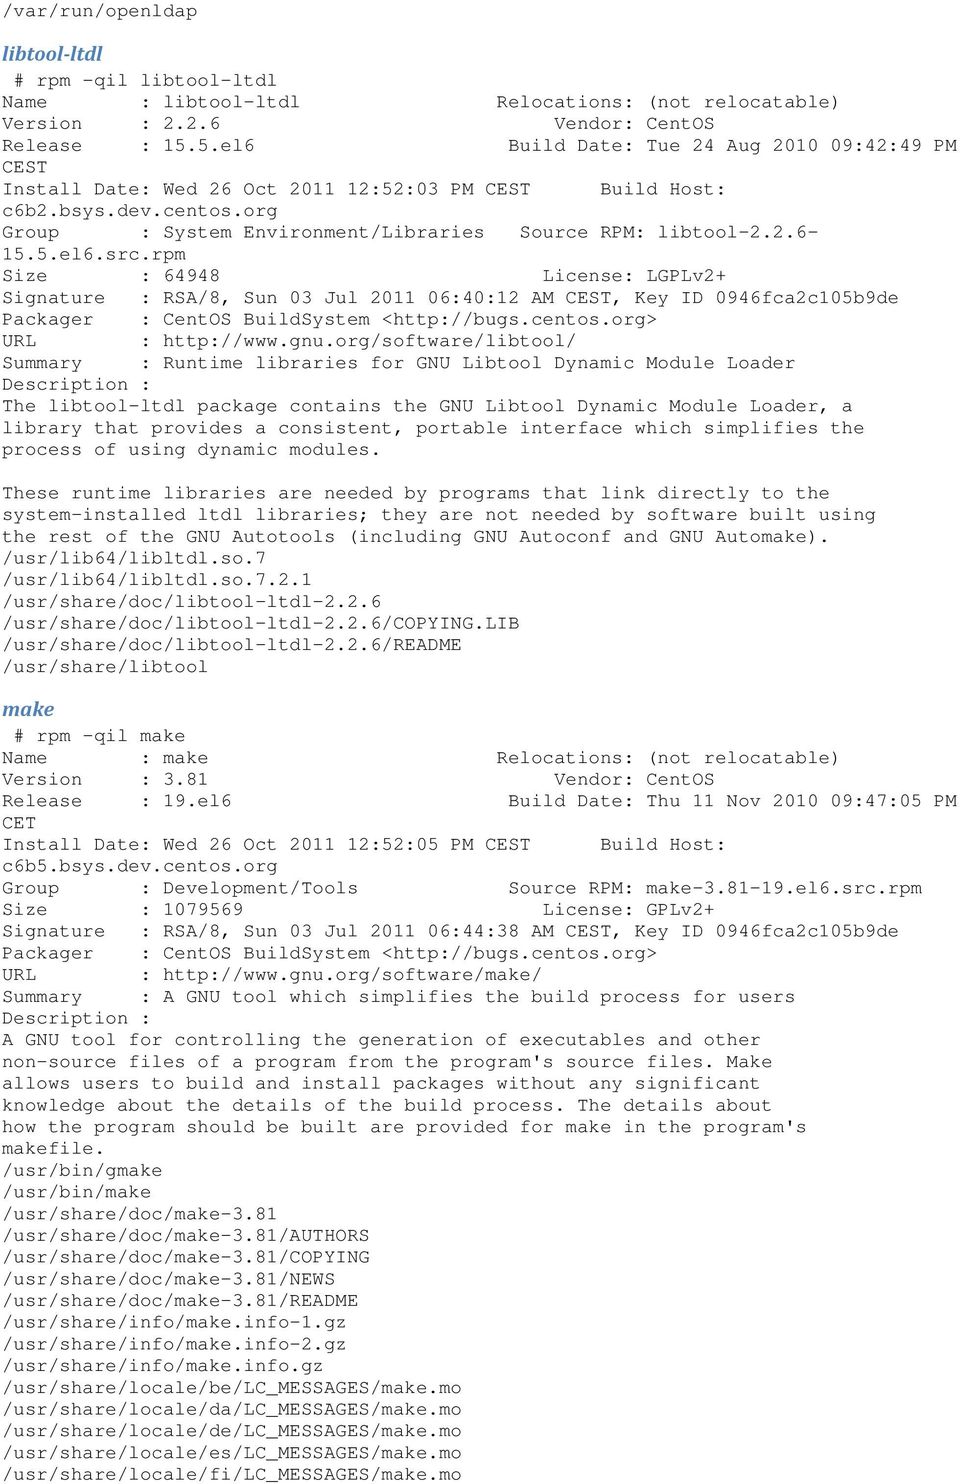 5.el6.src.rpm Size : 64948 License: LGPLv2+ Signature : RSA/8, Sun 03 Jul 2011 06:40:12 AM CEST, Key ID 0946fca2c105b9de Packager : CentOS BuildSystem <http://bugs.centos.org> URL : http://www.gnu.